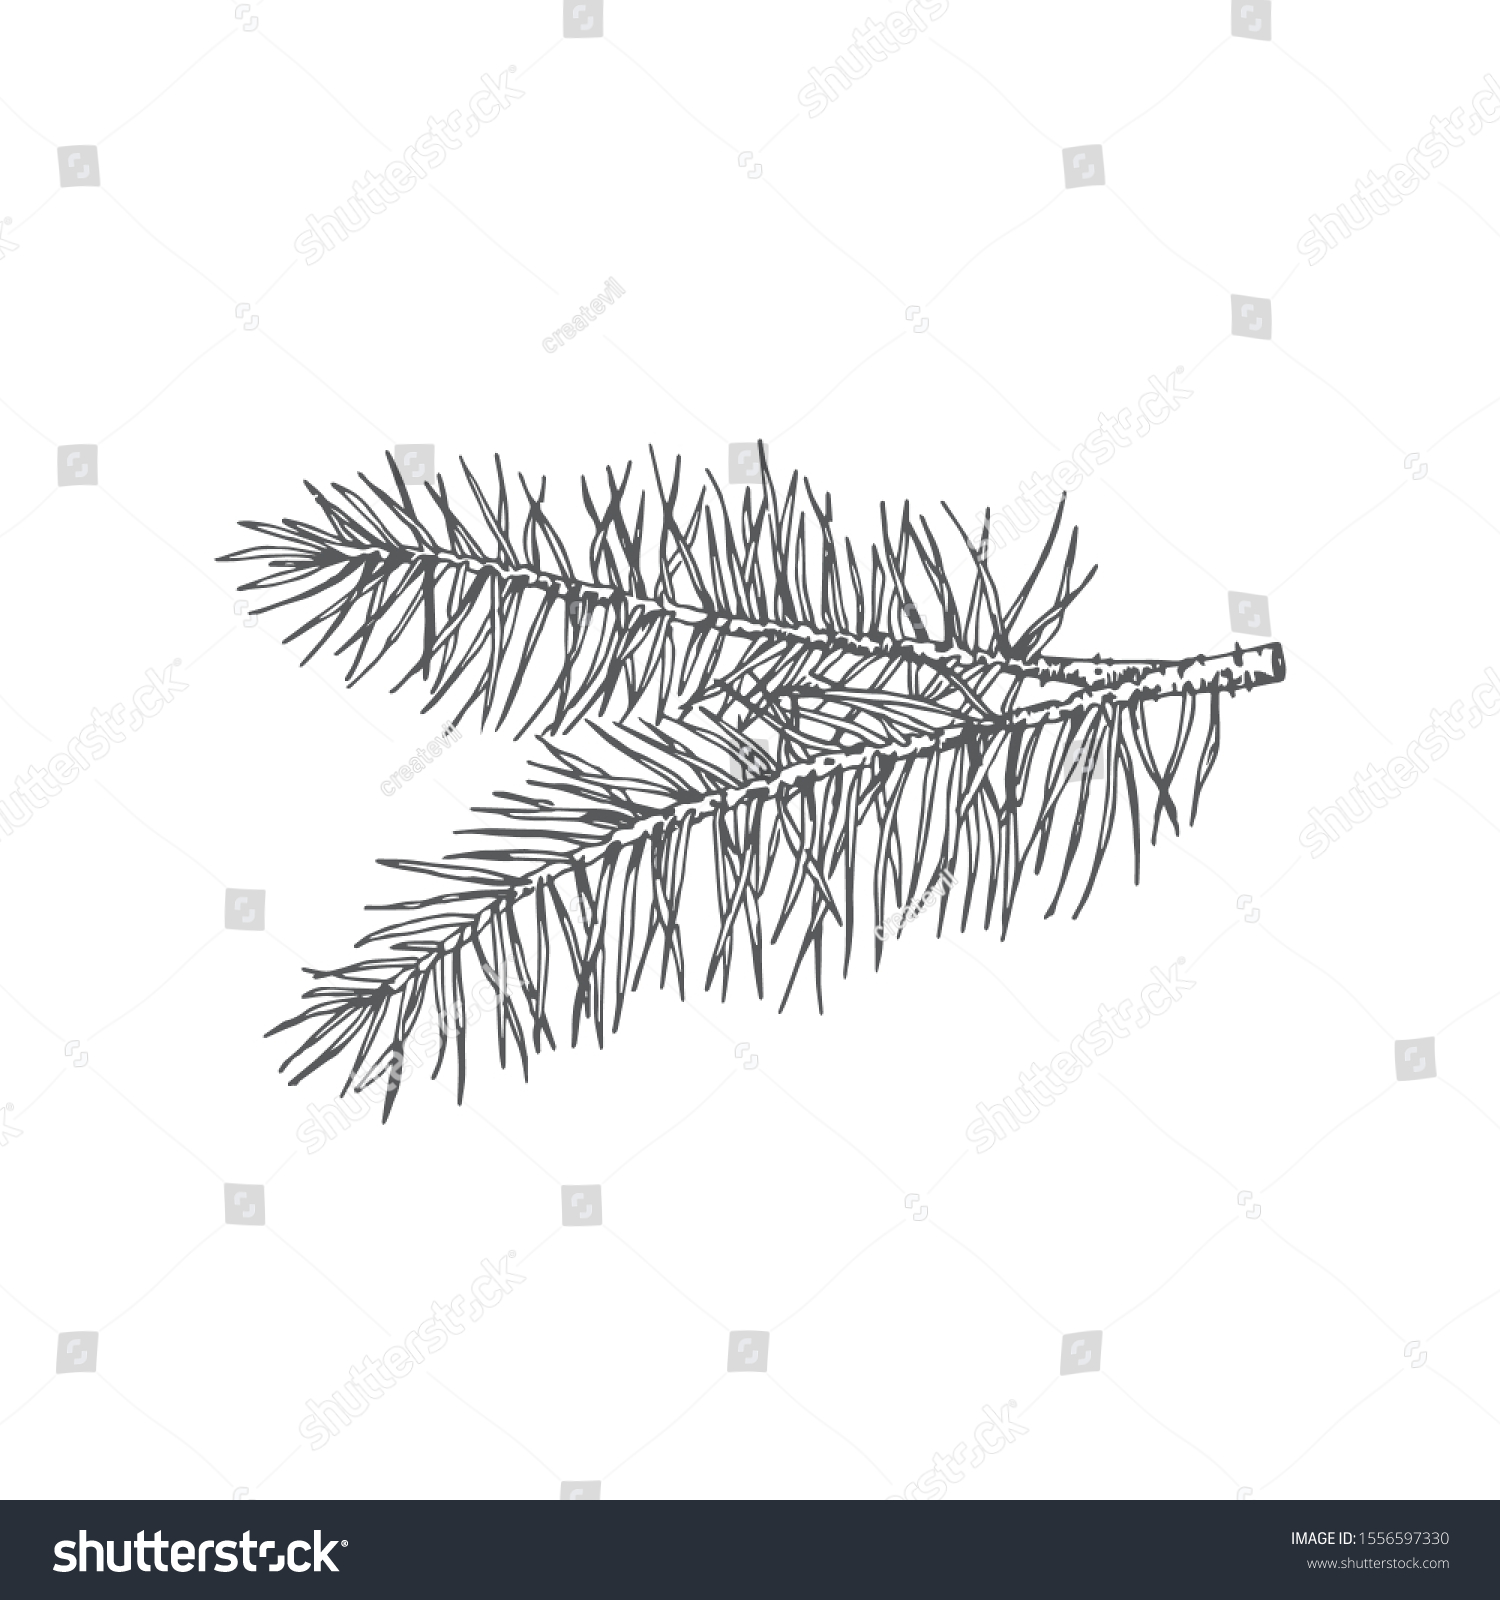 Pine needles drawing Images, Stock Photos & Vectors Shutterstock